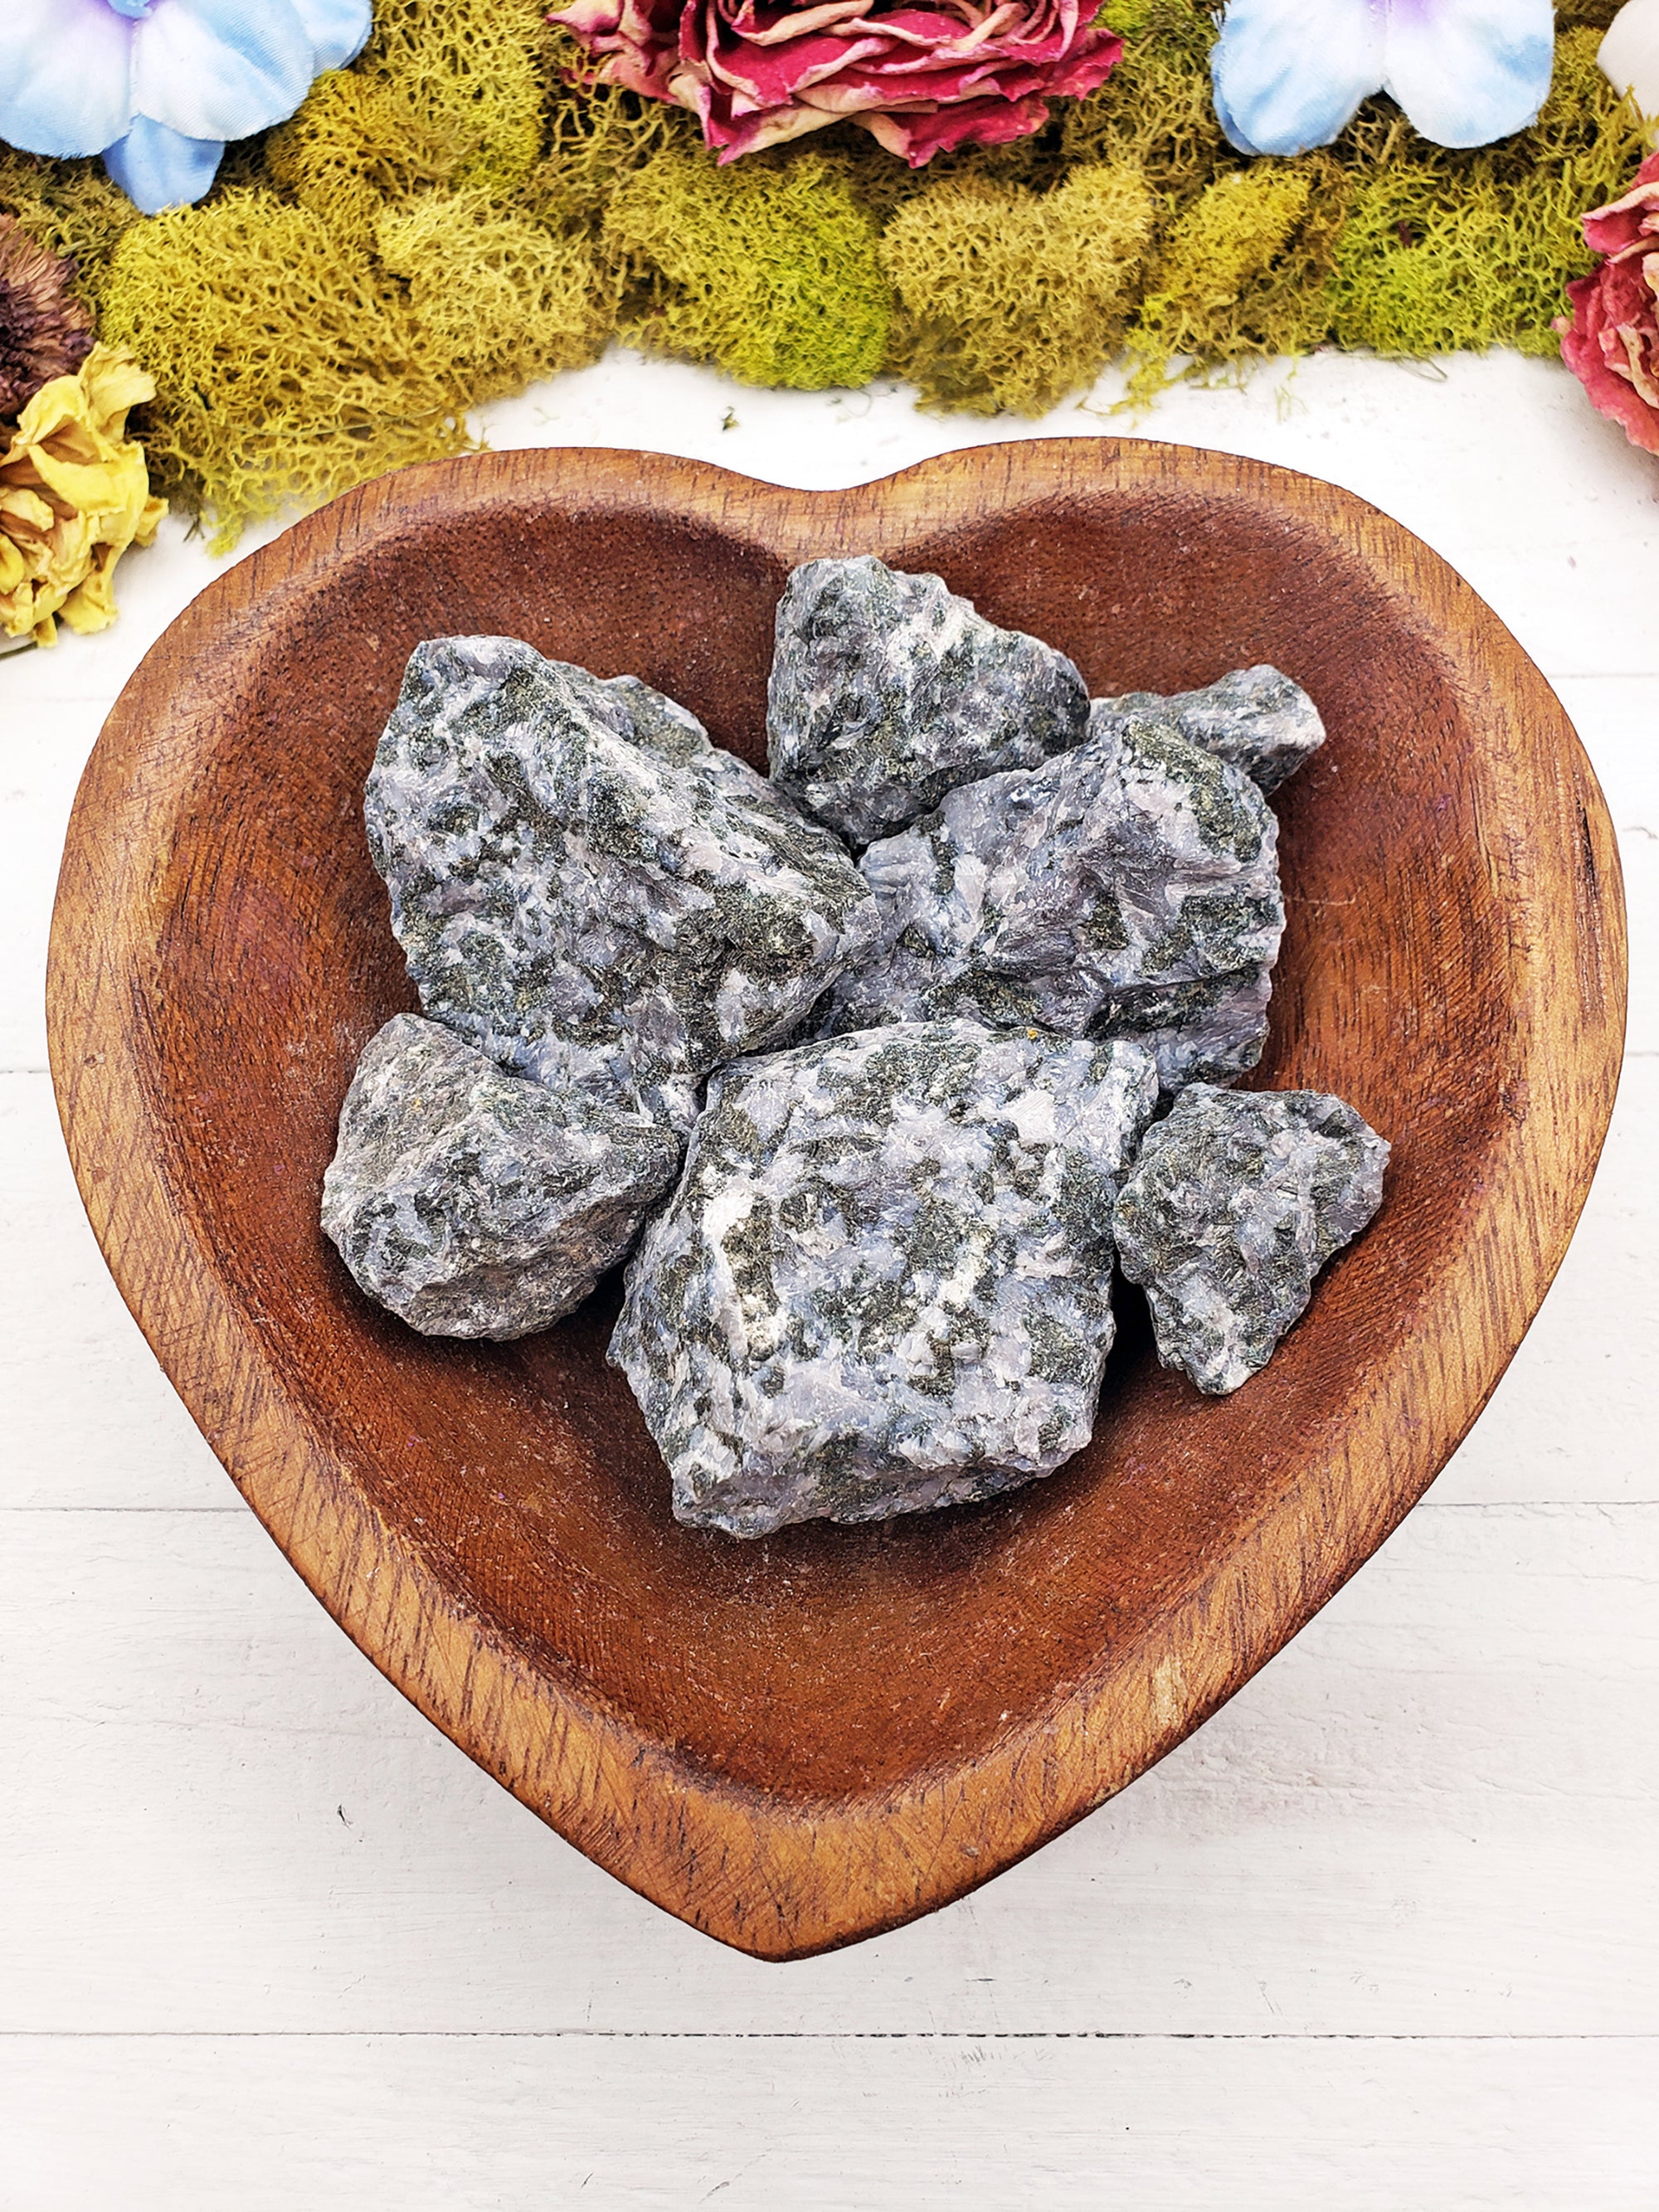 Merlinite Stones in heart-shaped bowl